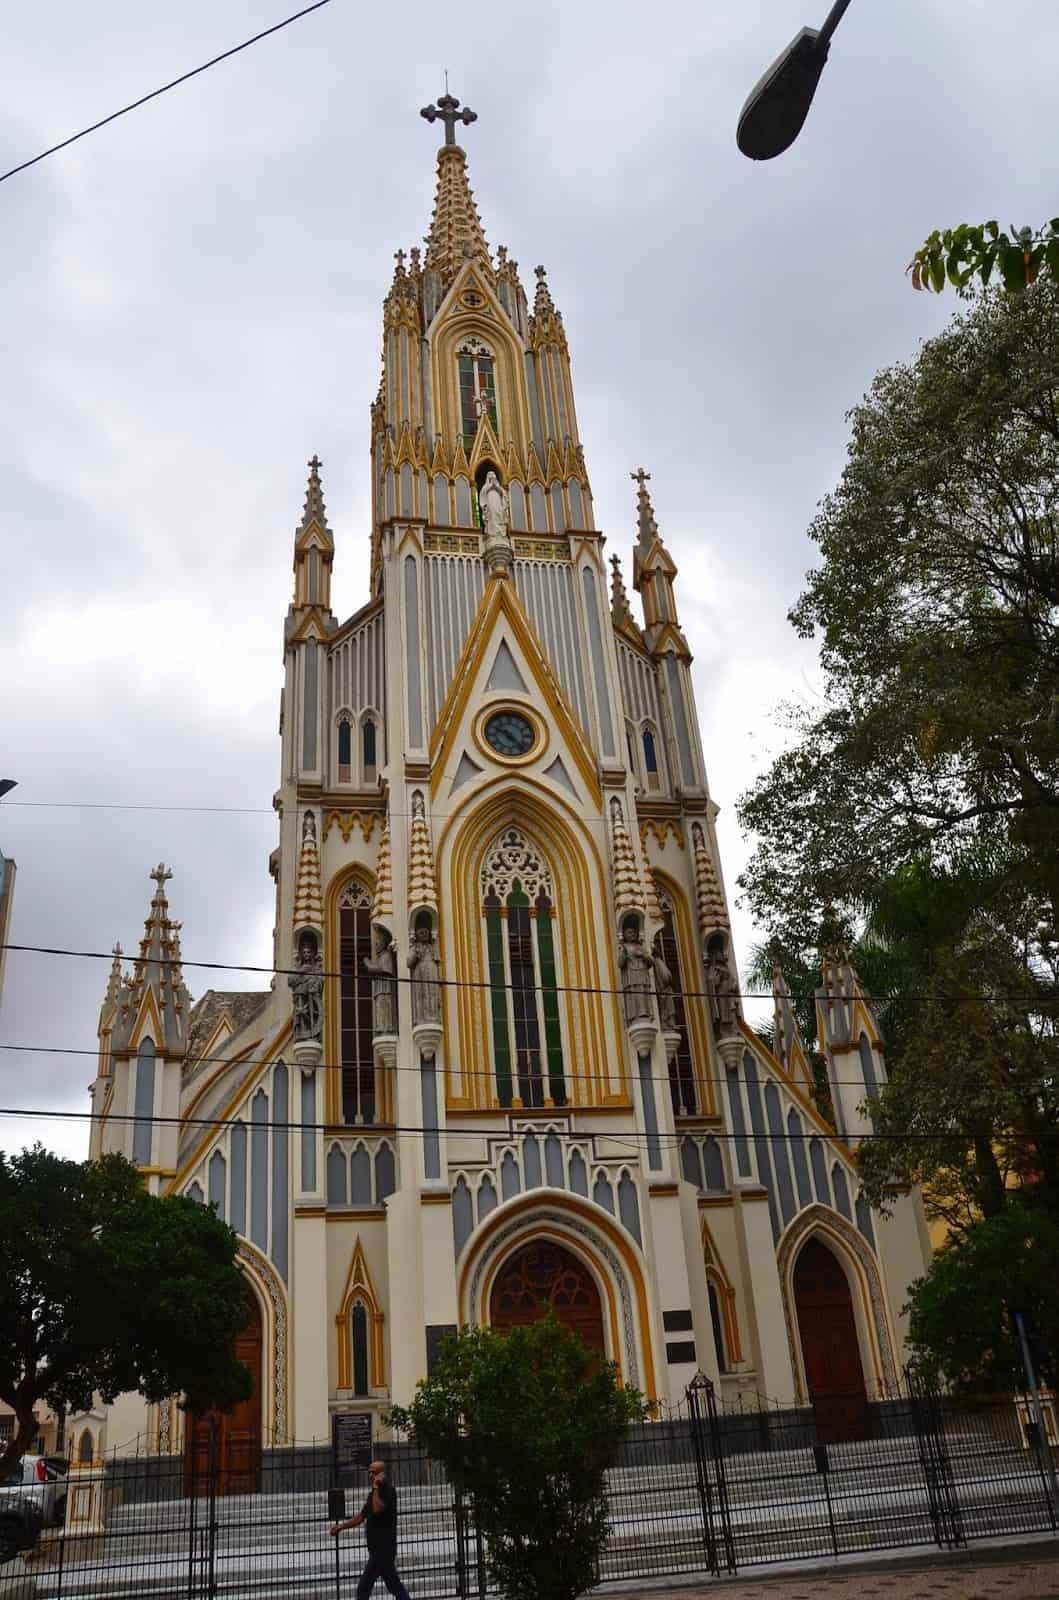 Basílica Nossa Senhora de Lourdes in Belo Horizonte, Brazil